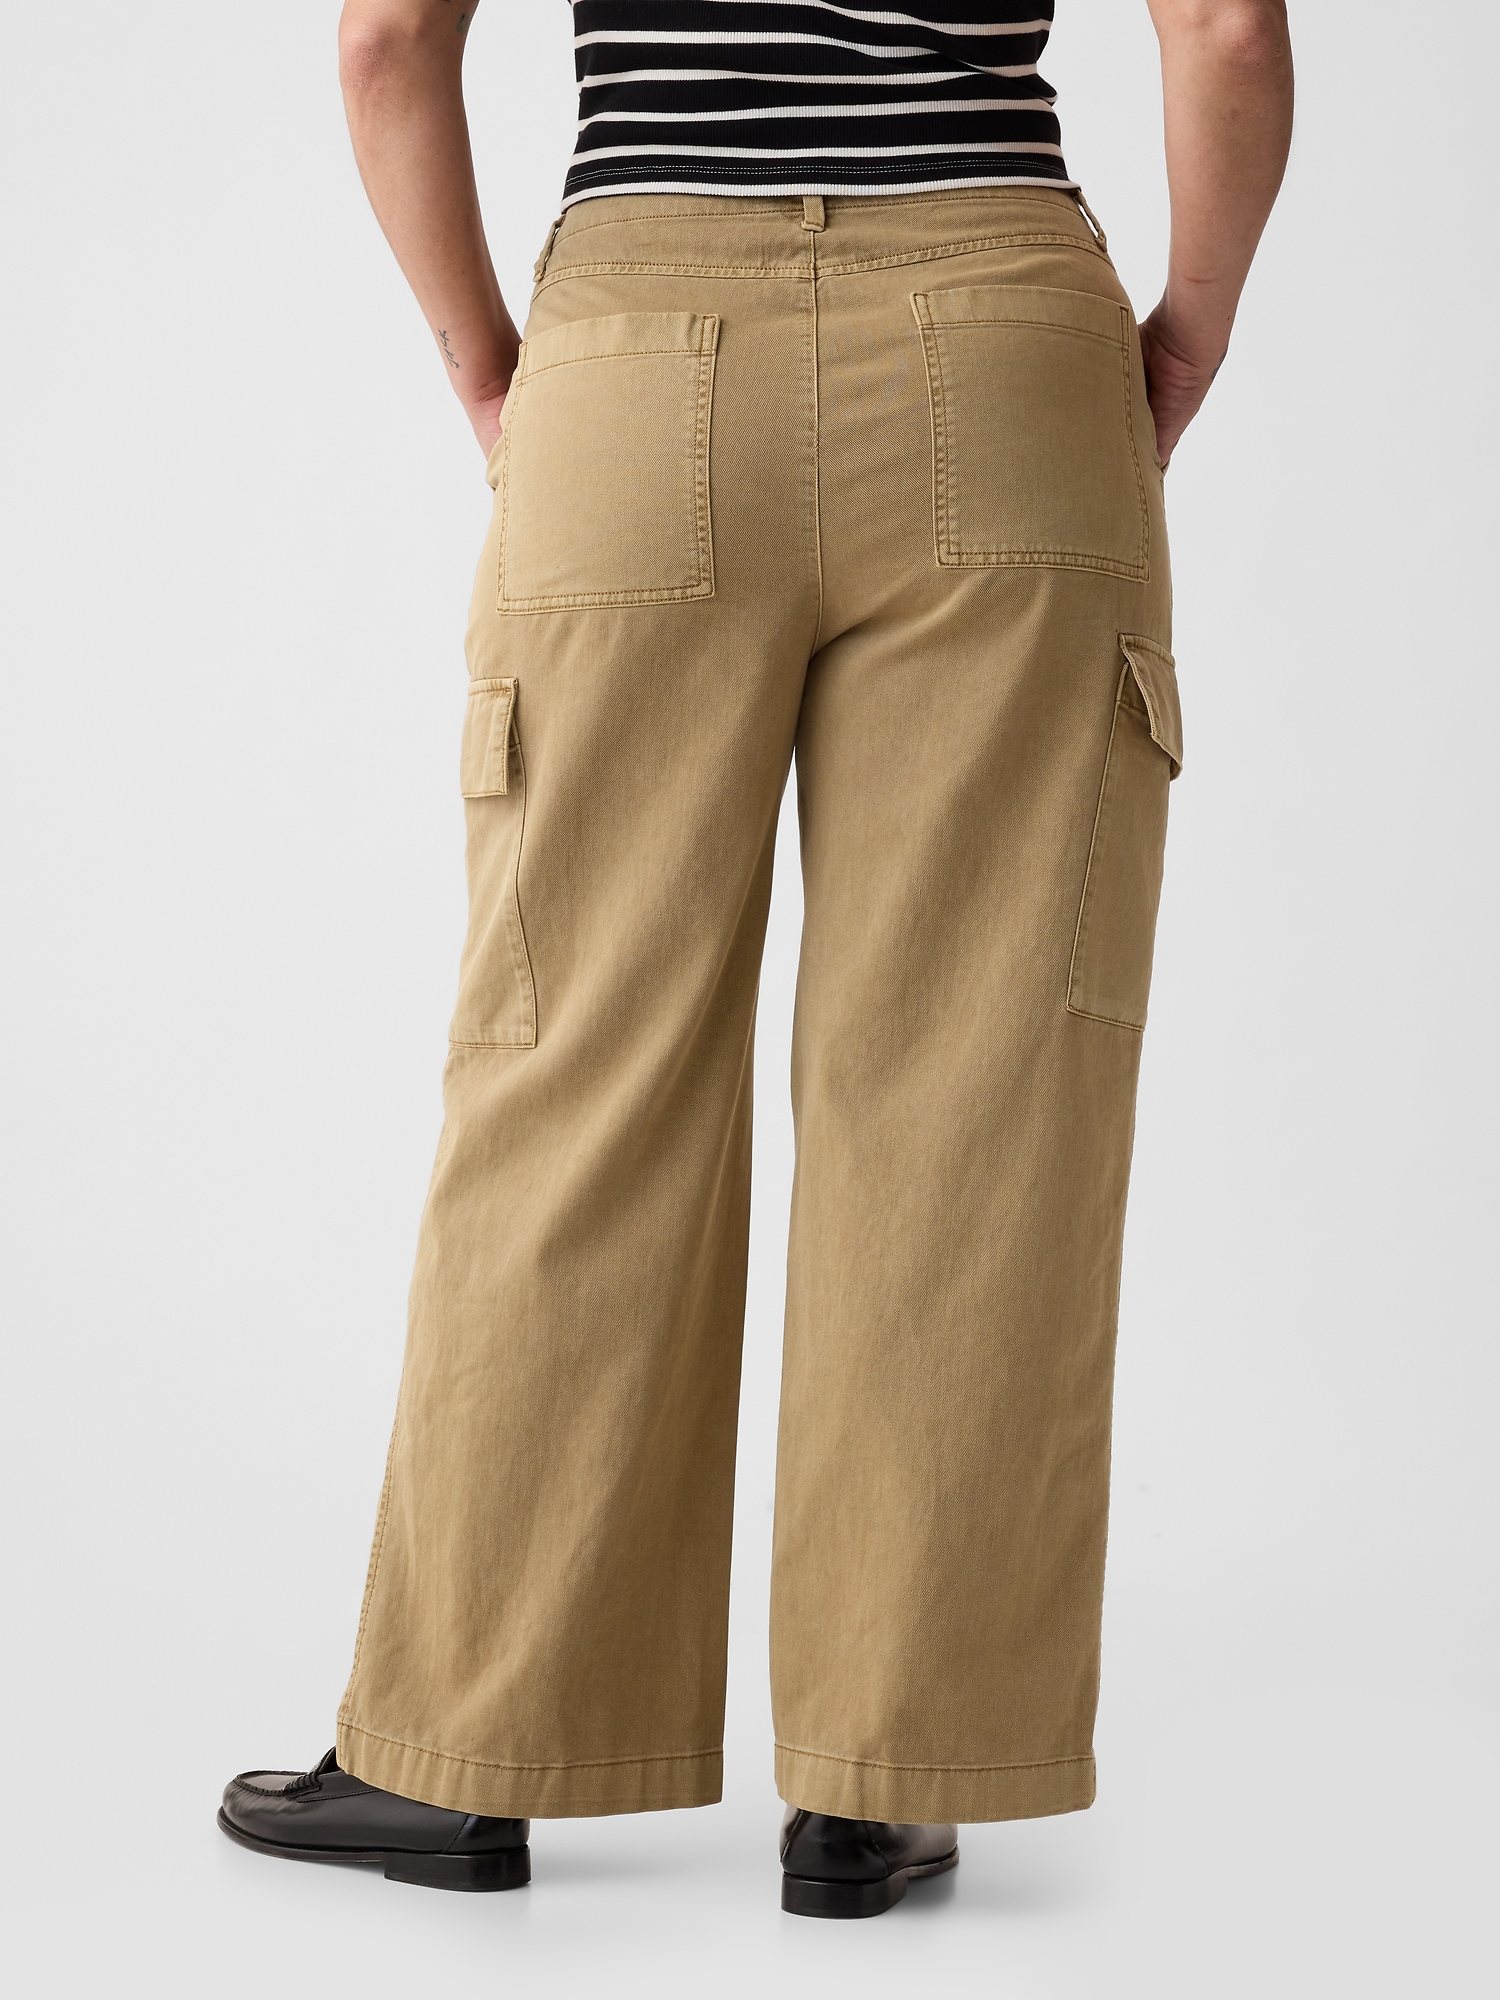 Plus Size Camo Print Cargo Pants With Side Pockets Mid Waist